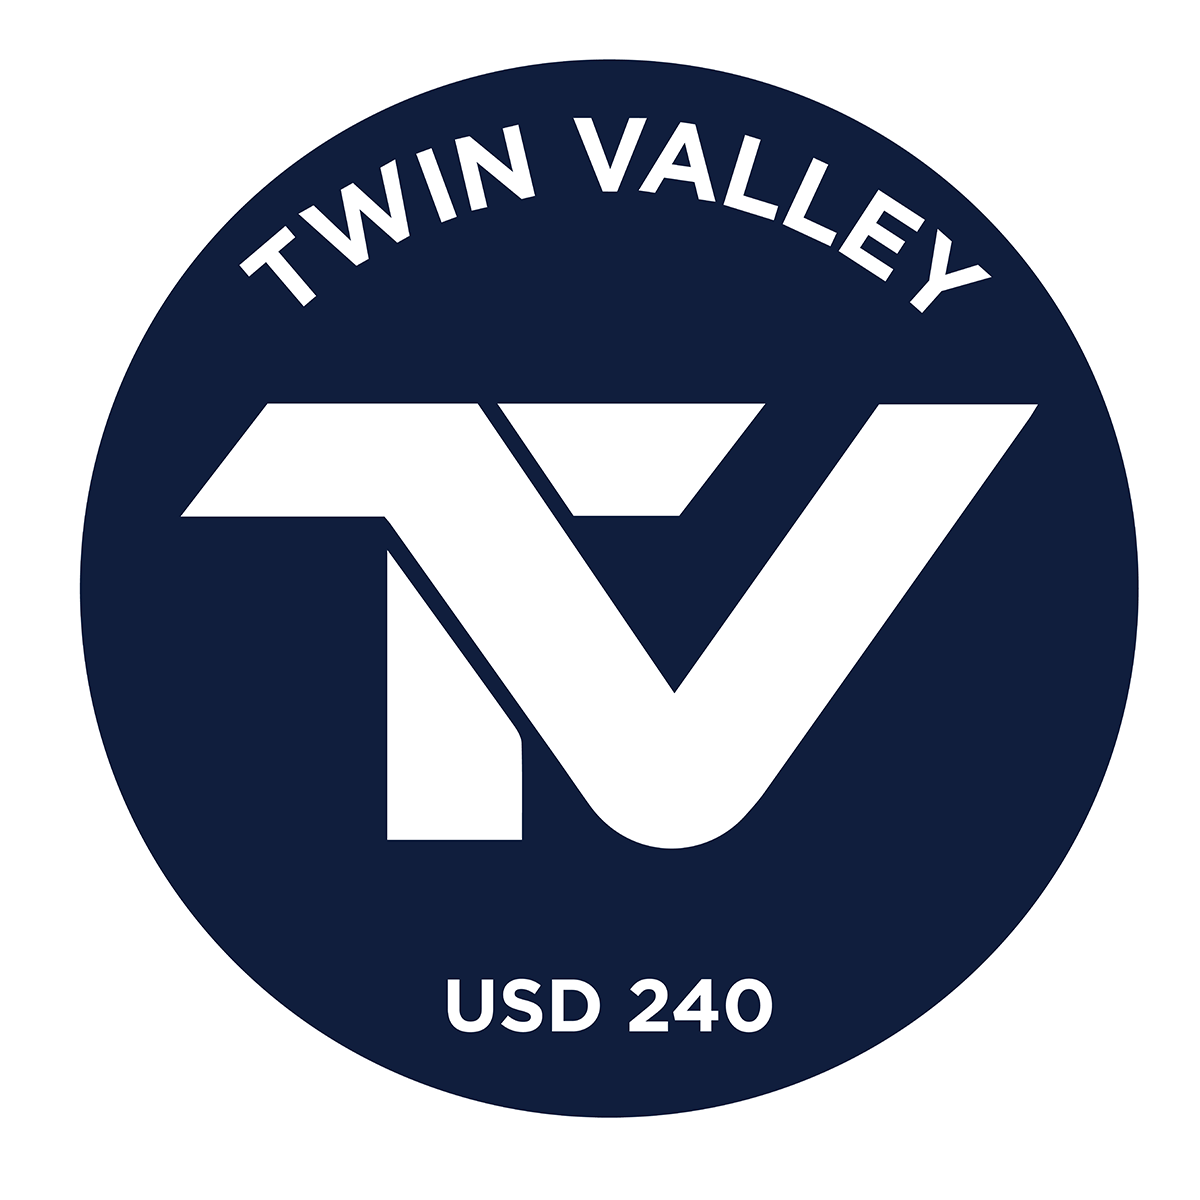 Twin Valley USD 240 logo